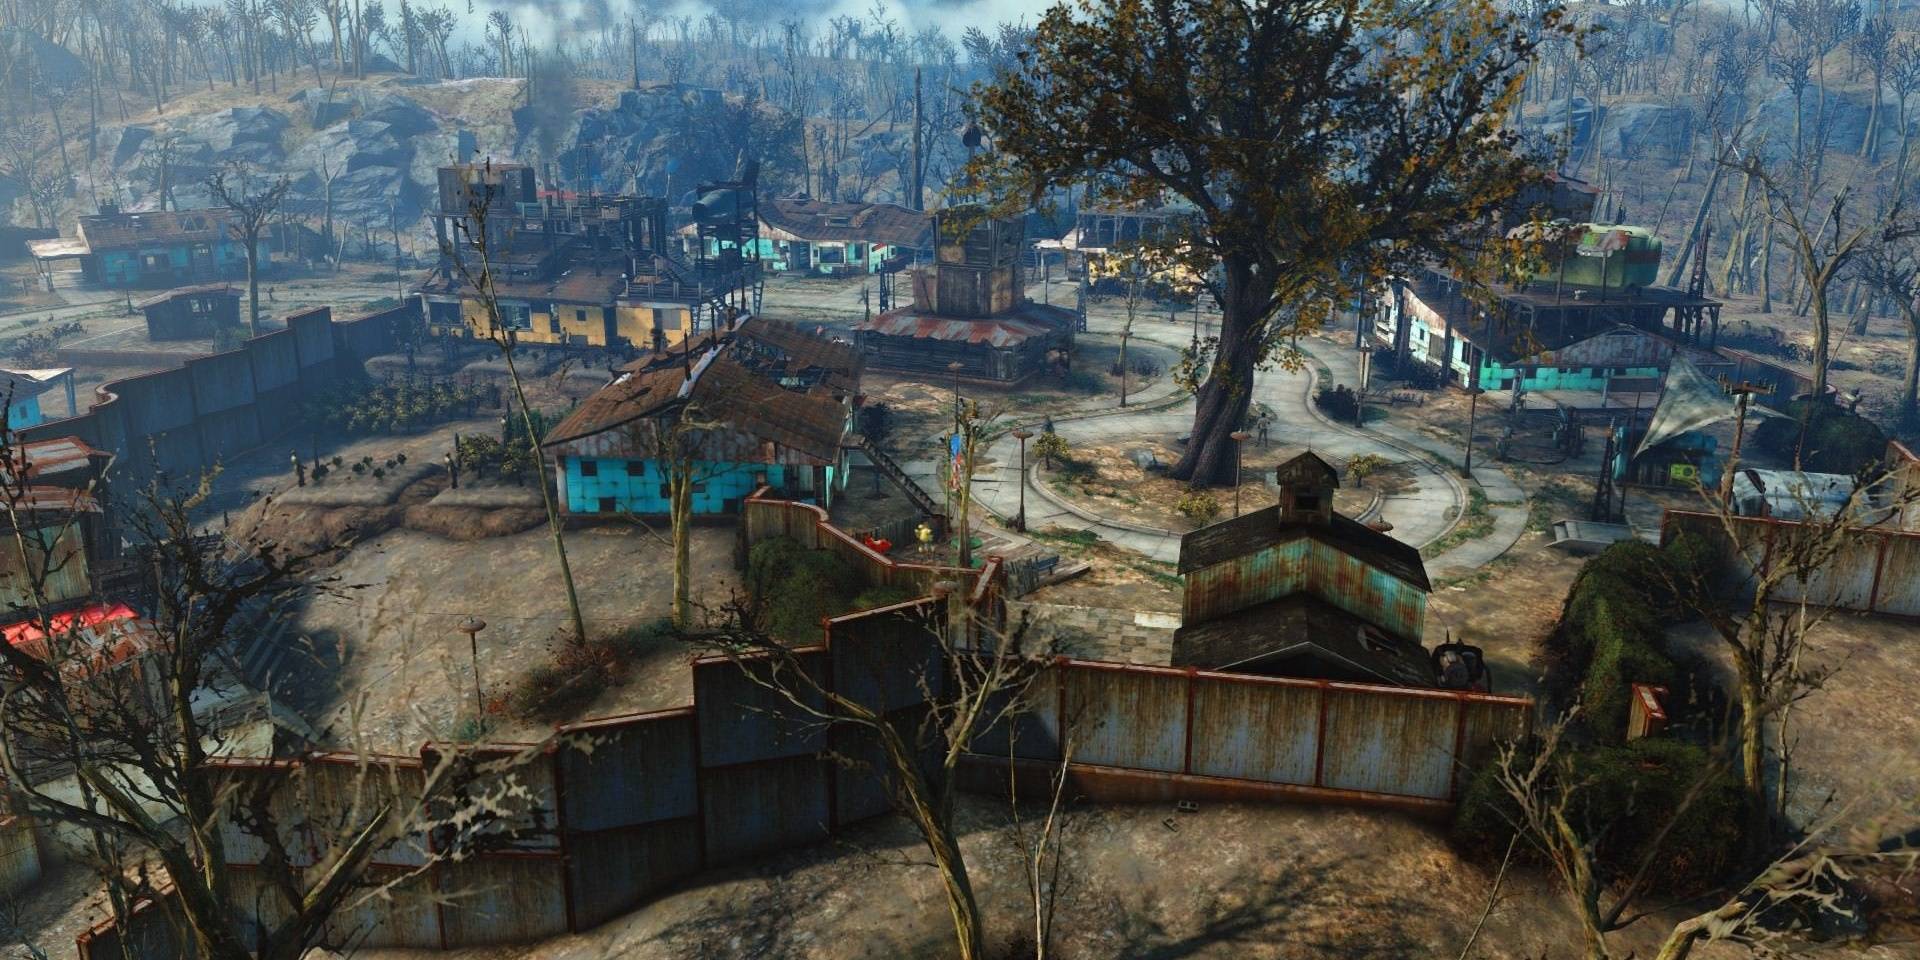 Best Fallout 4 Mods